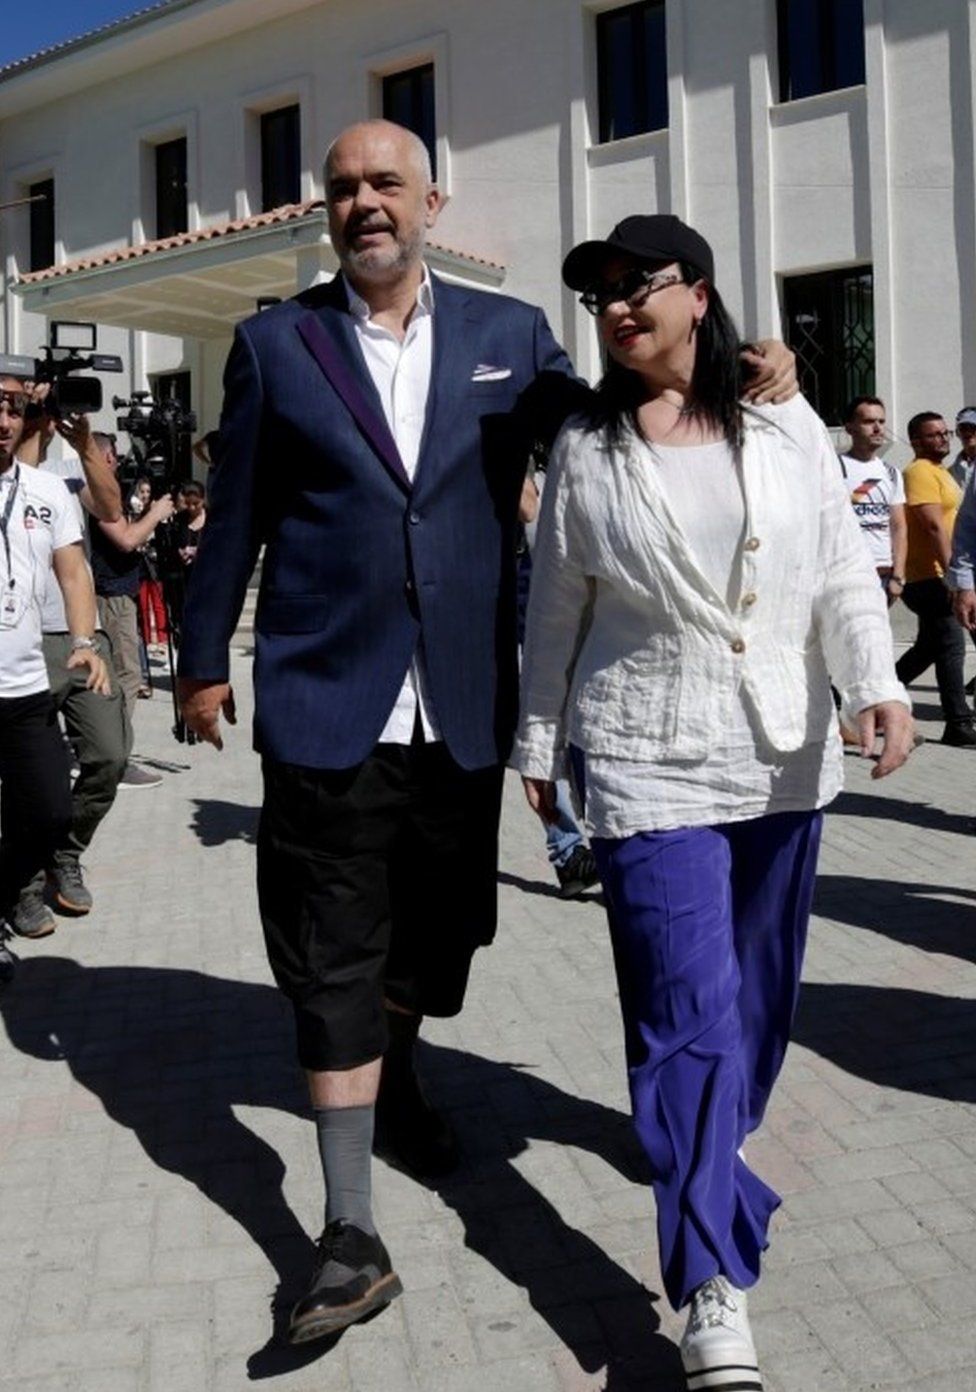 Albania's Prime Minister Edi Rama and his wife Linda Rama leave the polling station, near Tirana